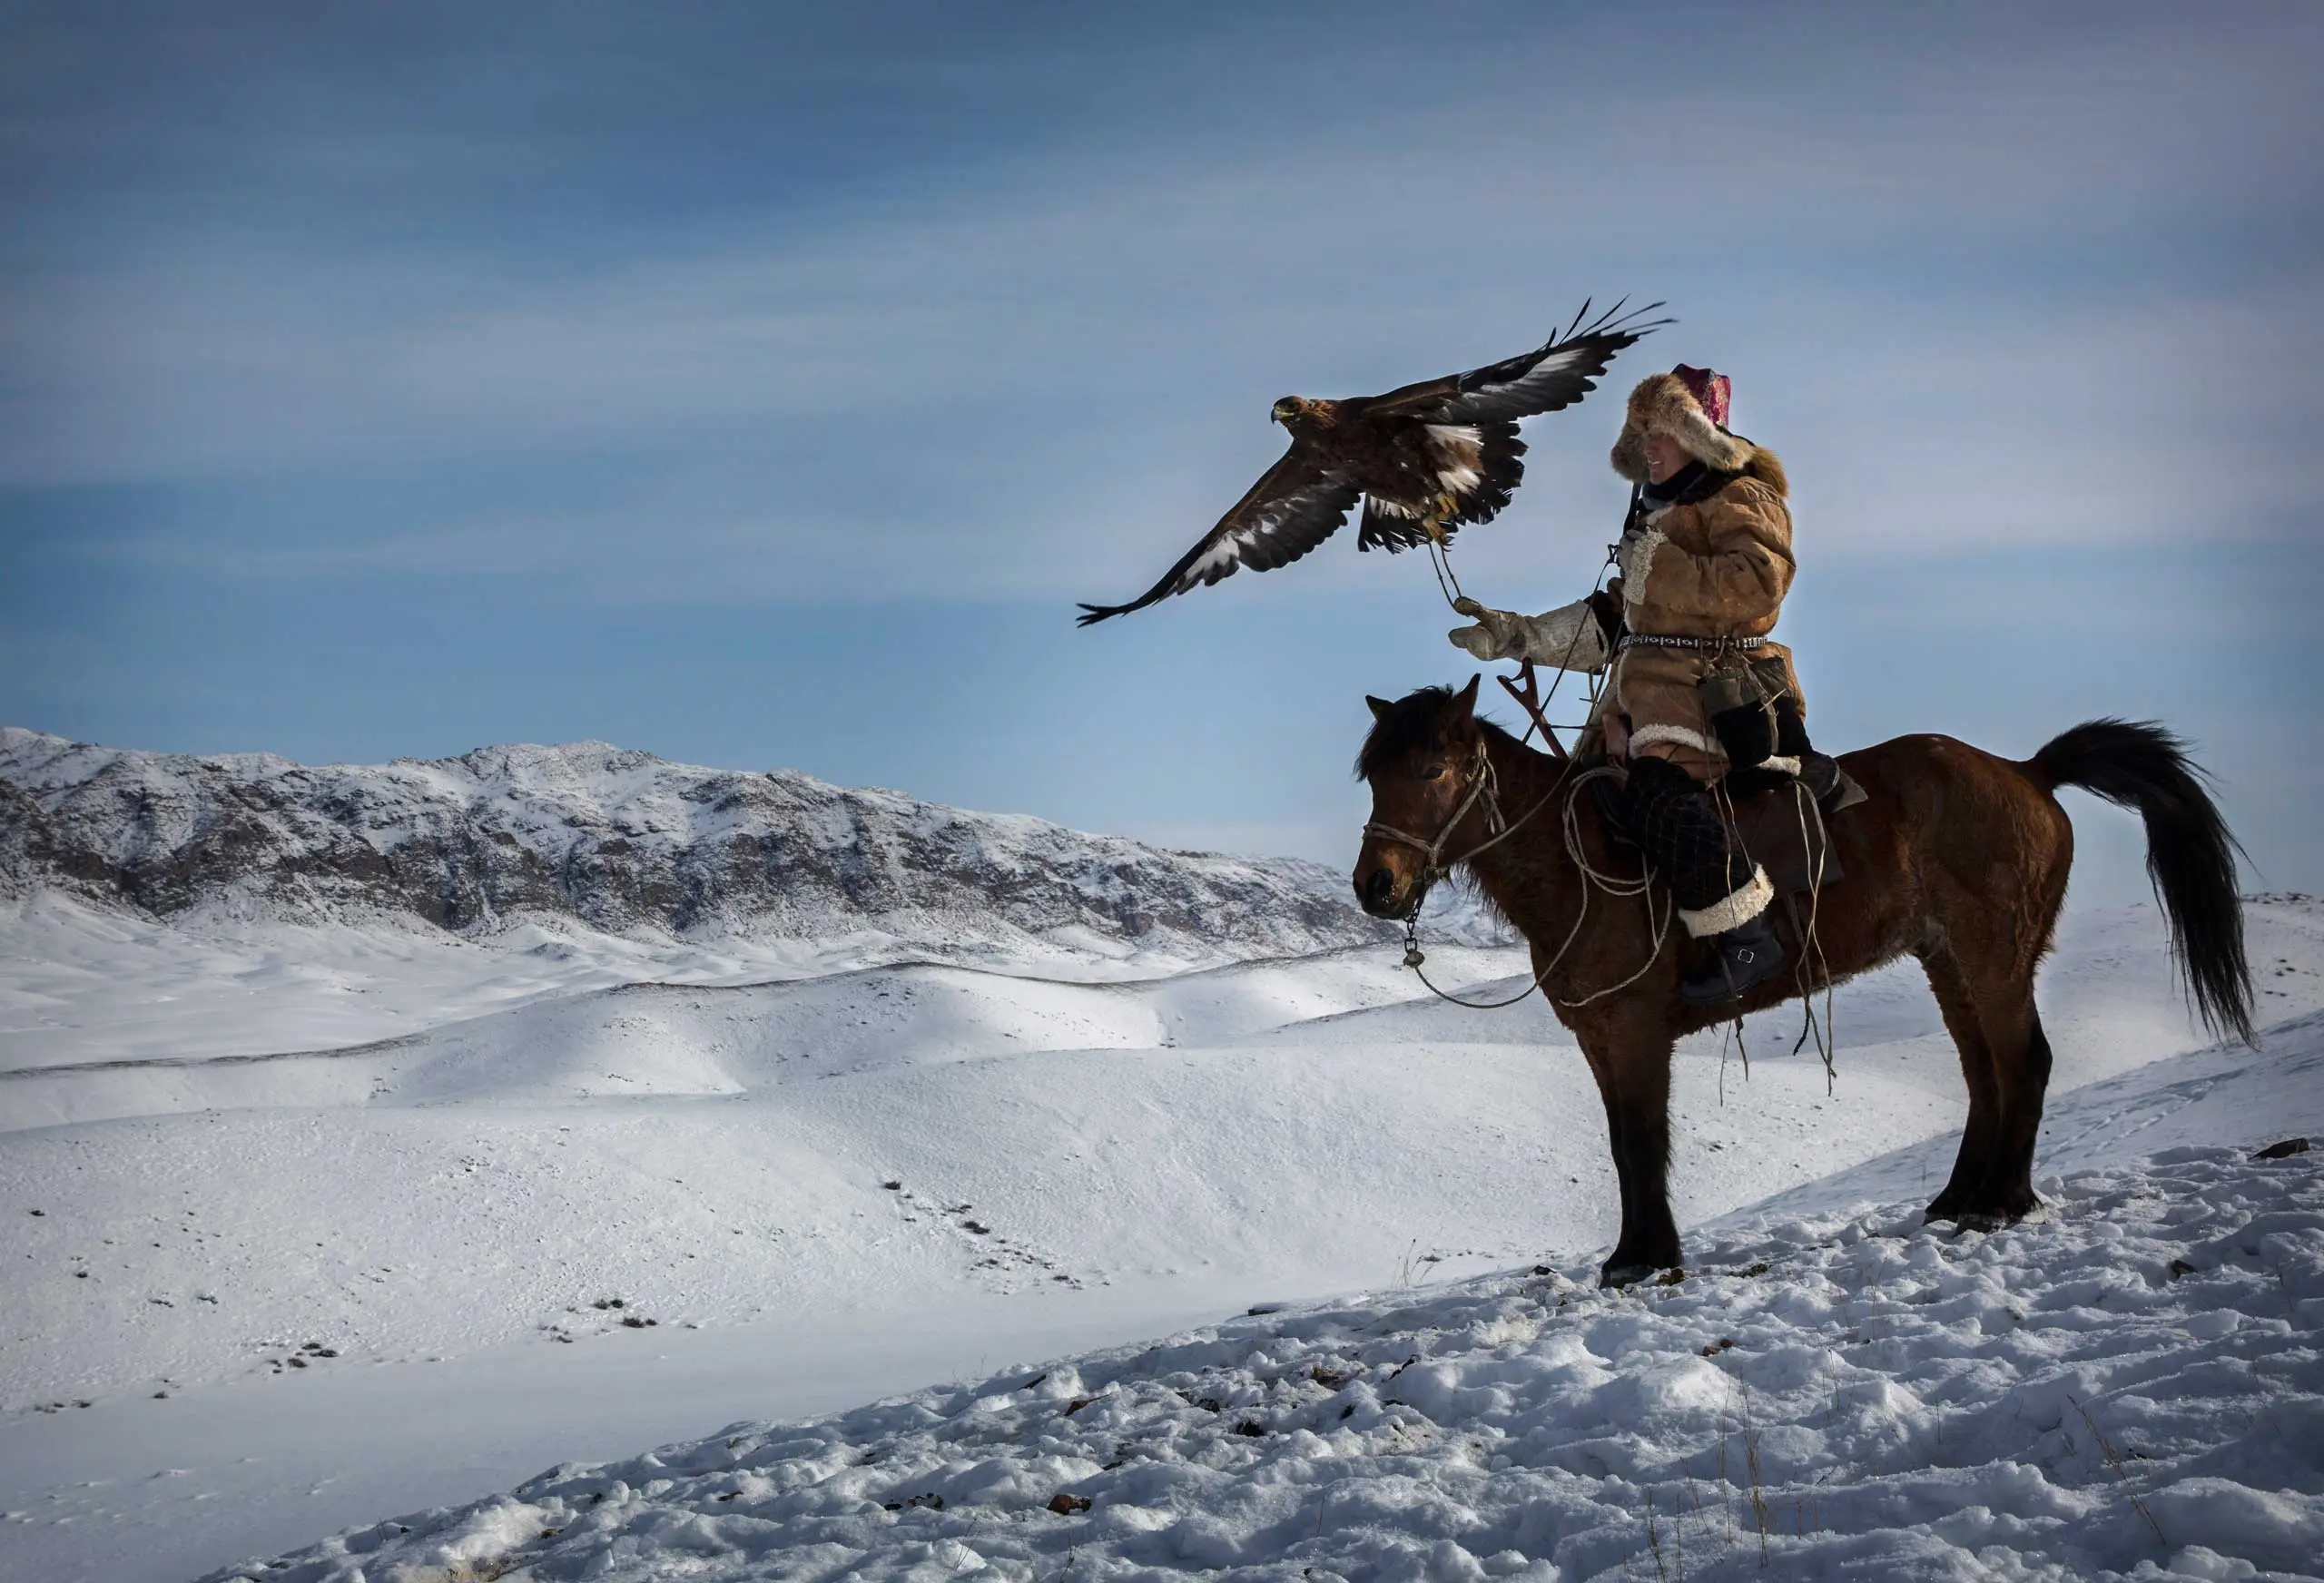 Kazakh Eagle hunters in western Mongolia